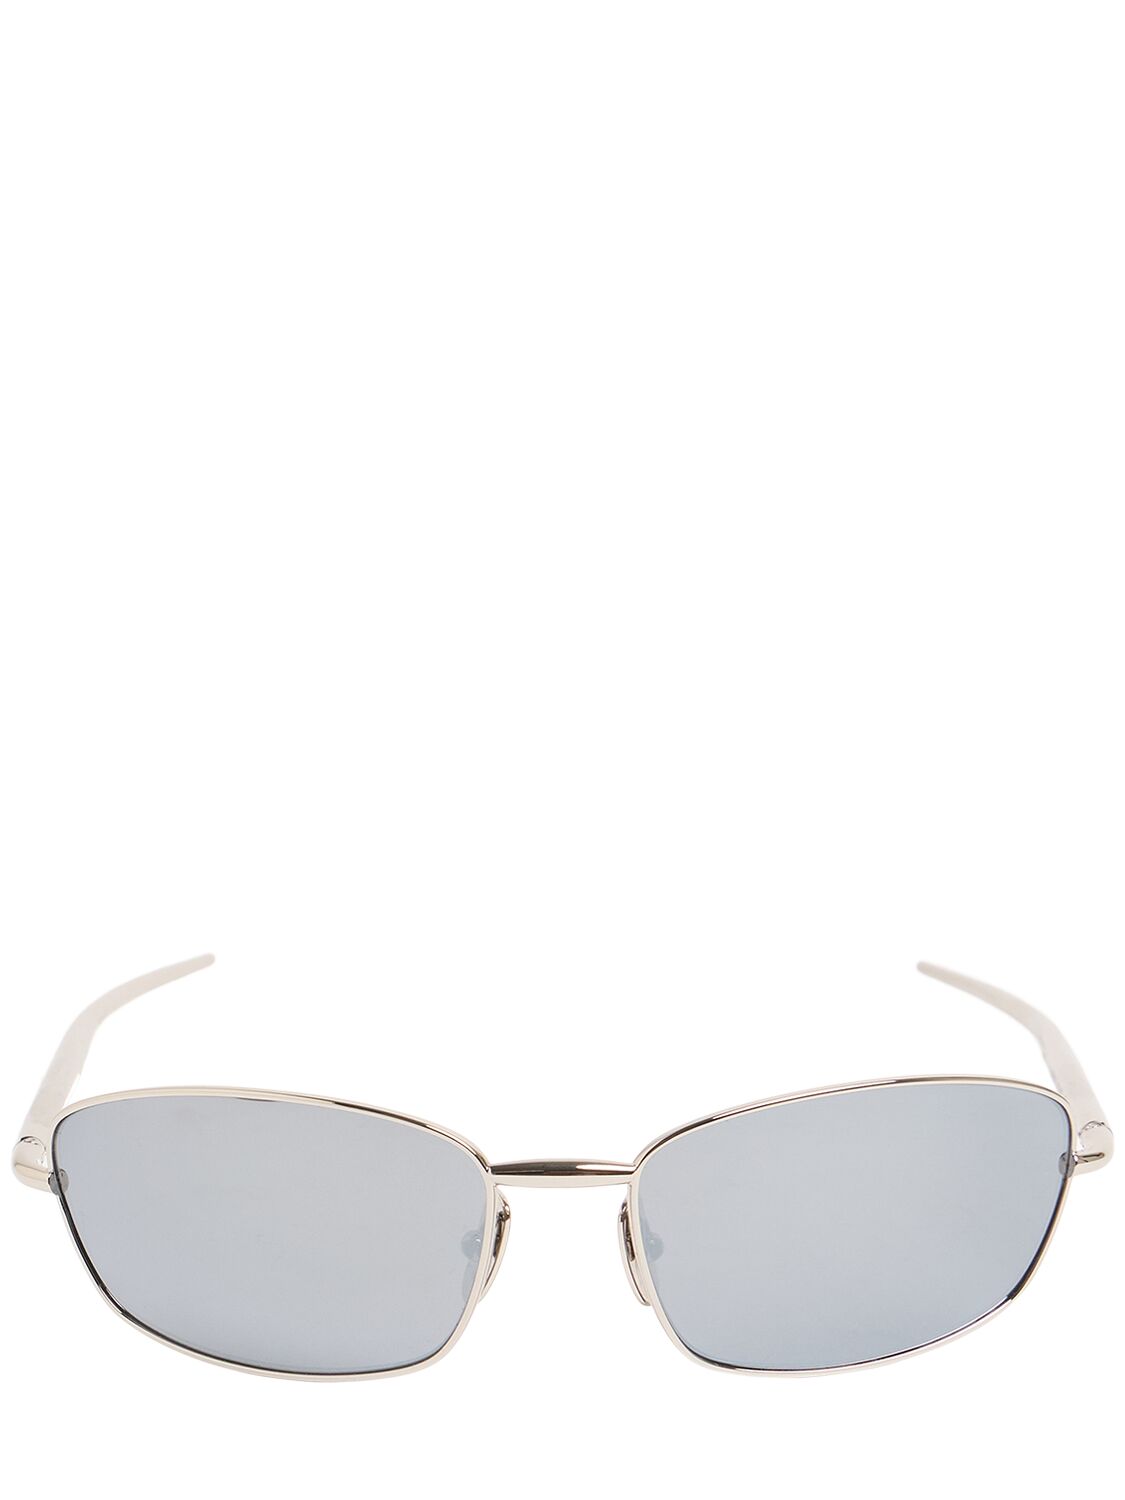 Chimi Reach Photochromic Titanium Sunglasses In Silver